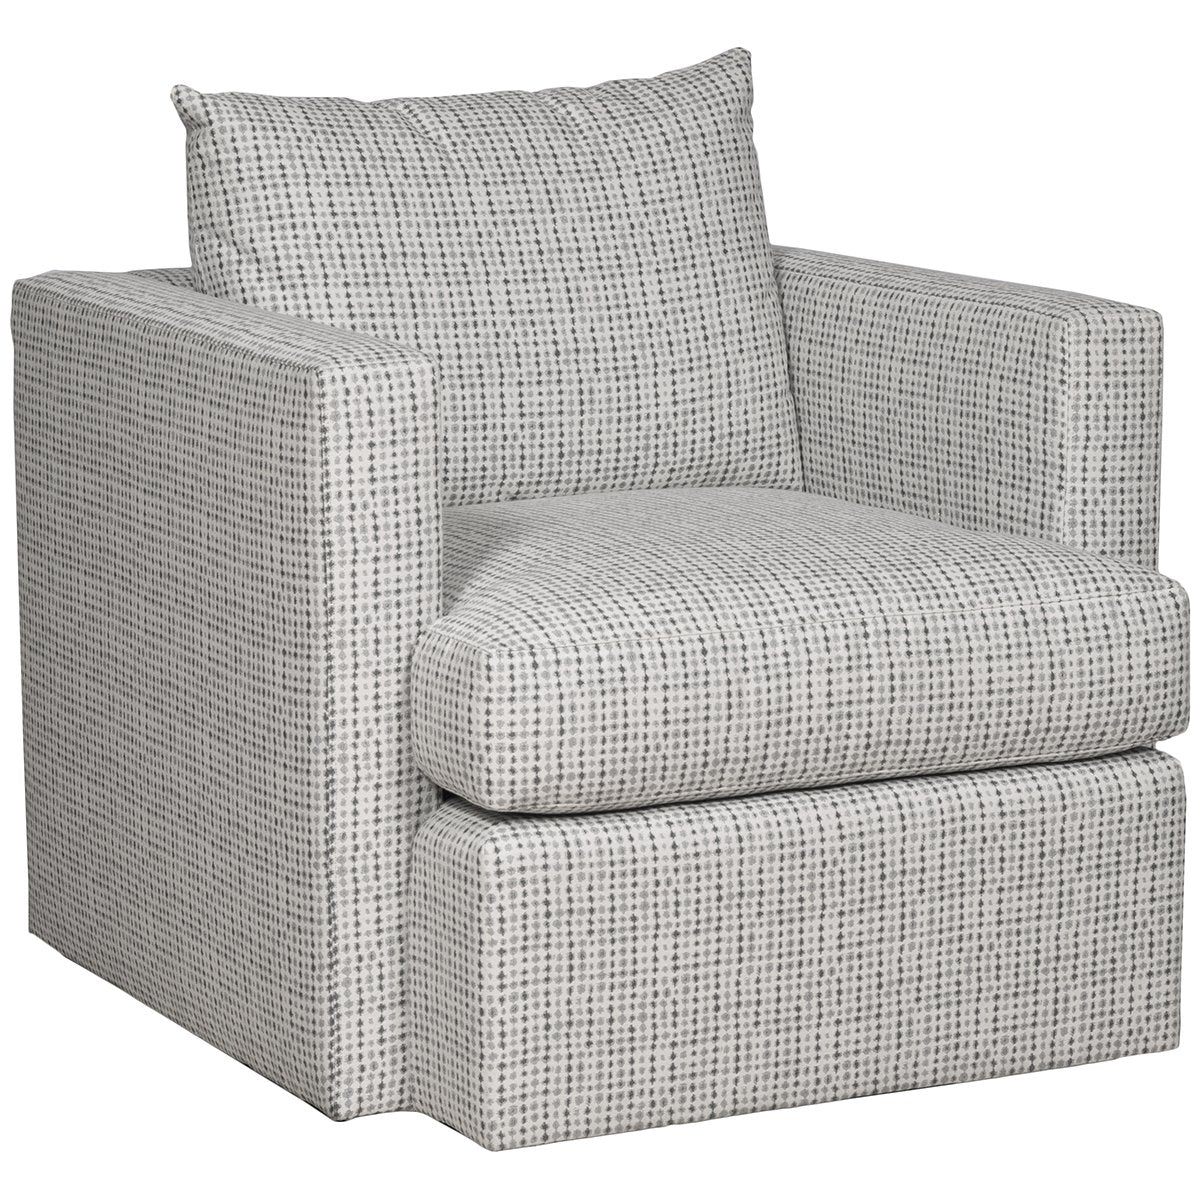 Vanguard Furniture Emory Chair